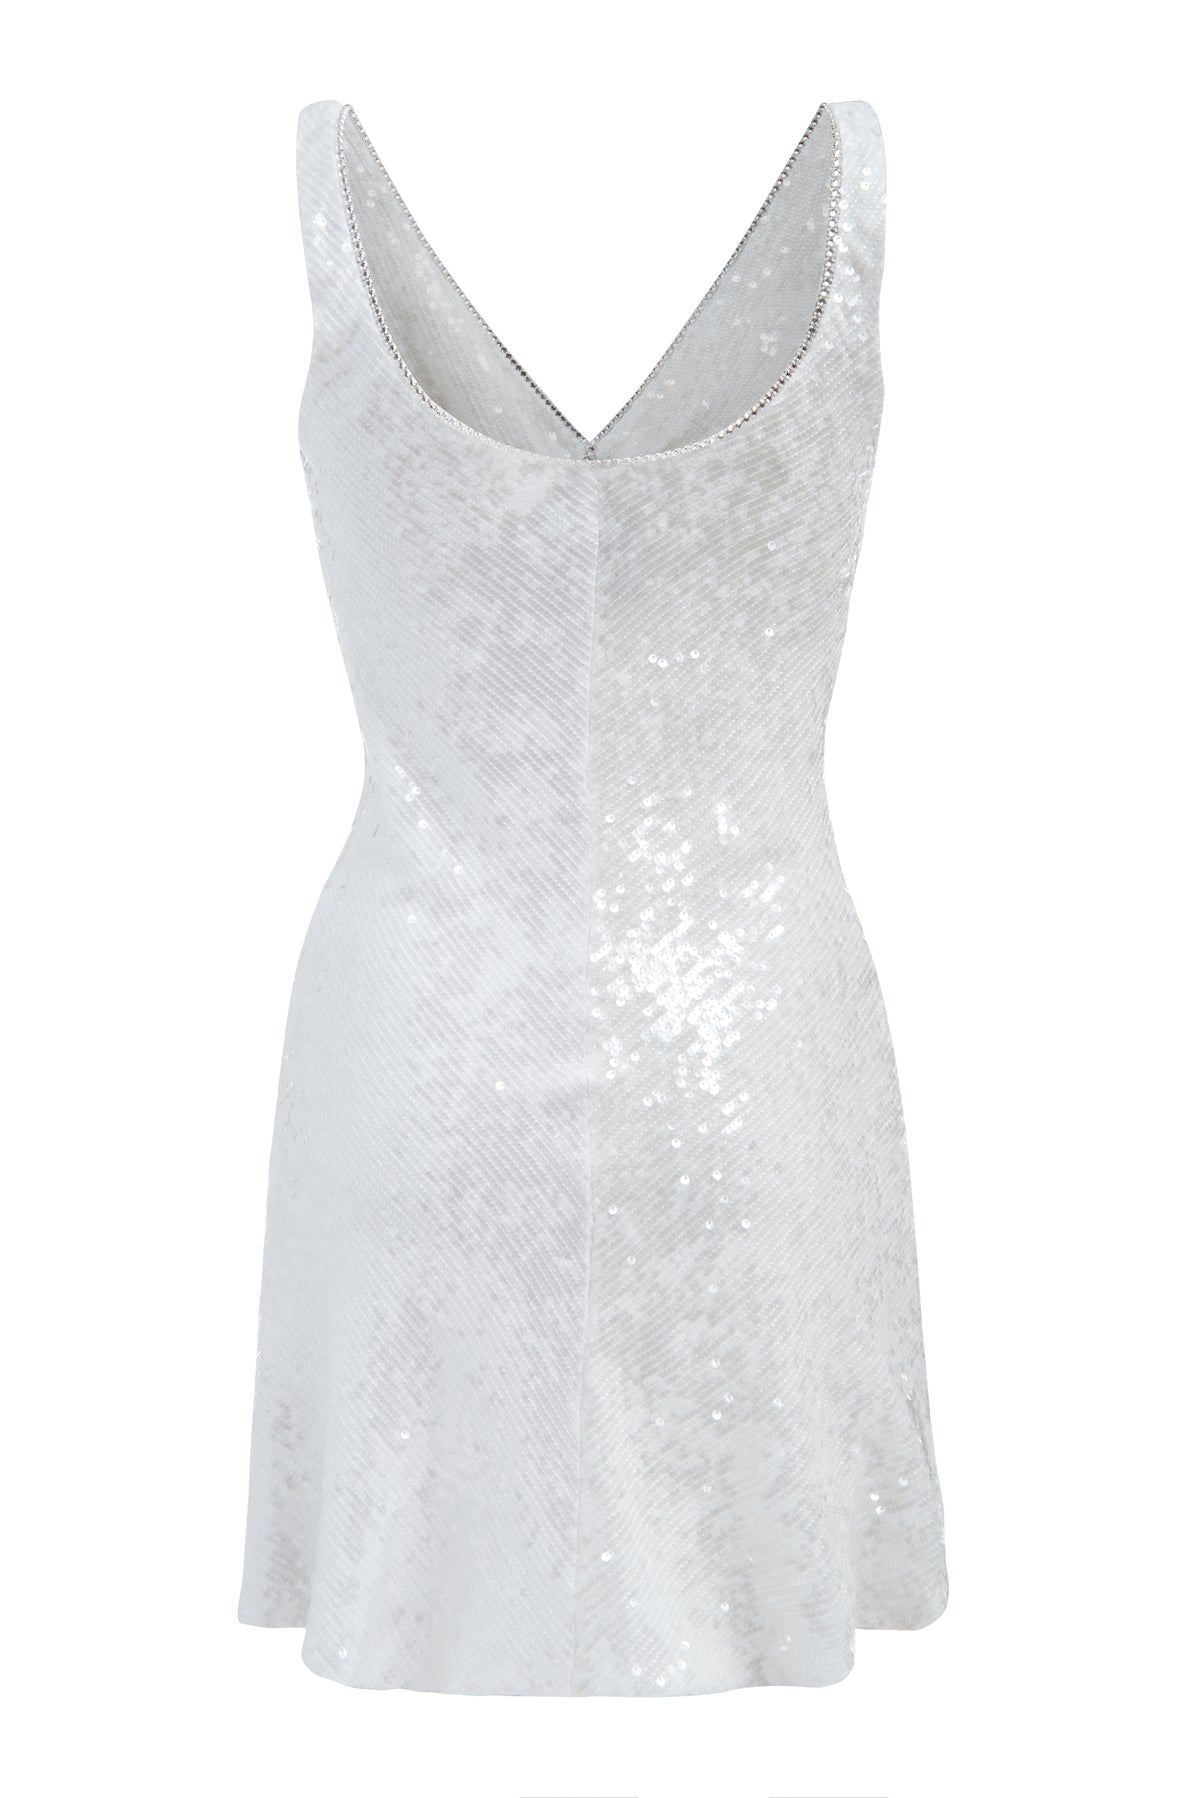 white sparkly mini dress